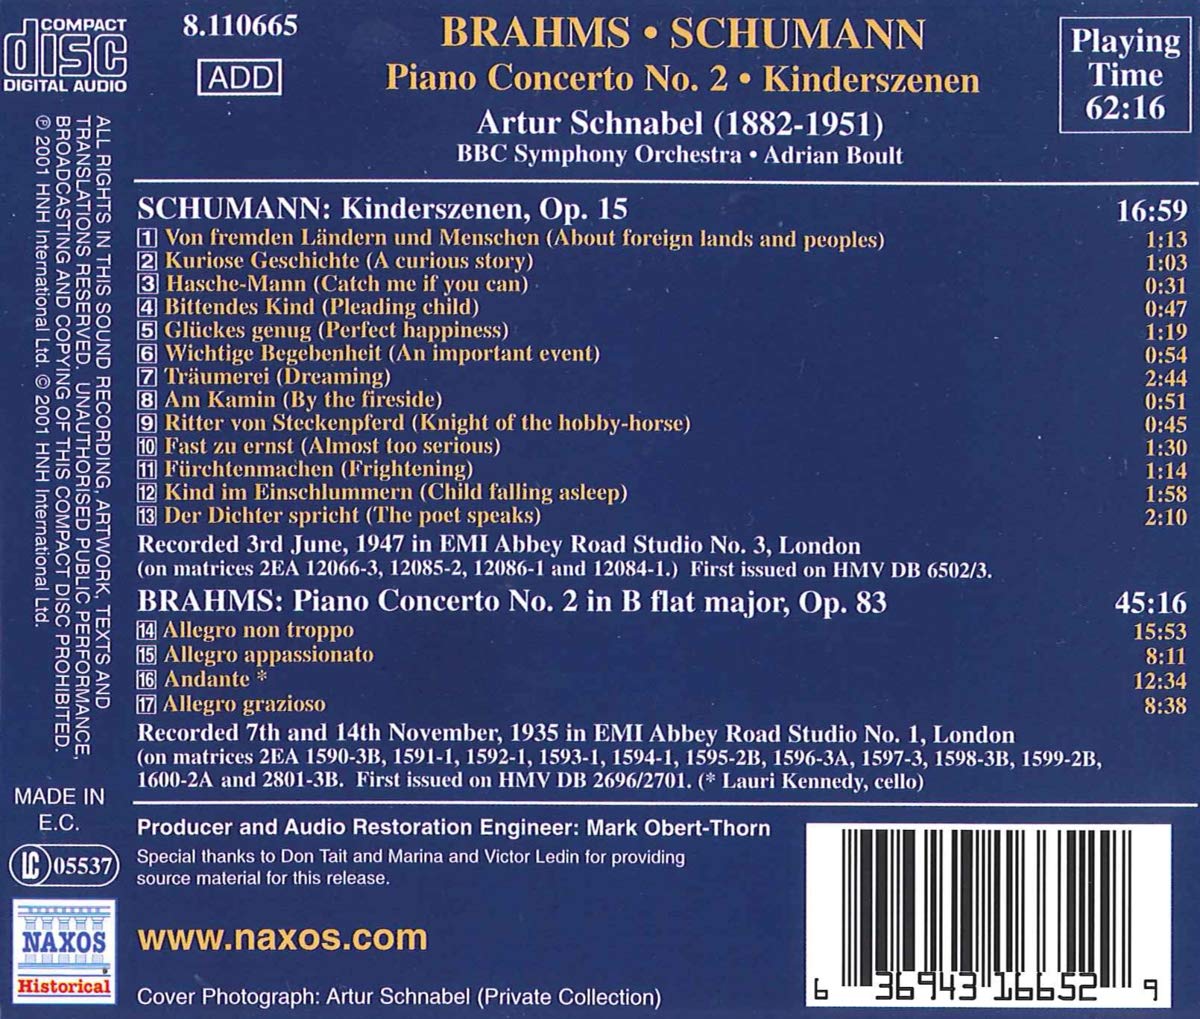 Artur Schnabel 브람스: 피아노 협주곡 2번 / 슈만: 어린이 정경 (Brahms : Piano Concerto Op.83 / Schumann : Kinderszenen) 